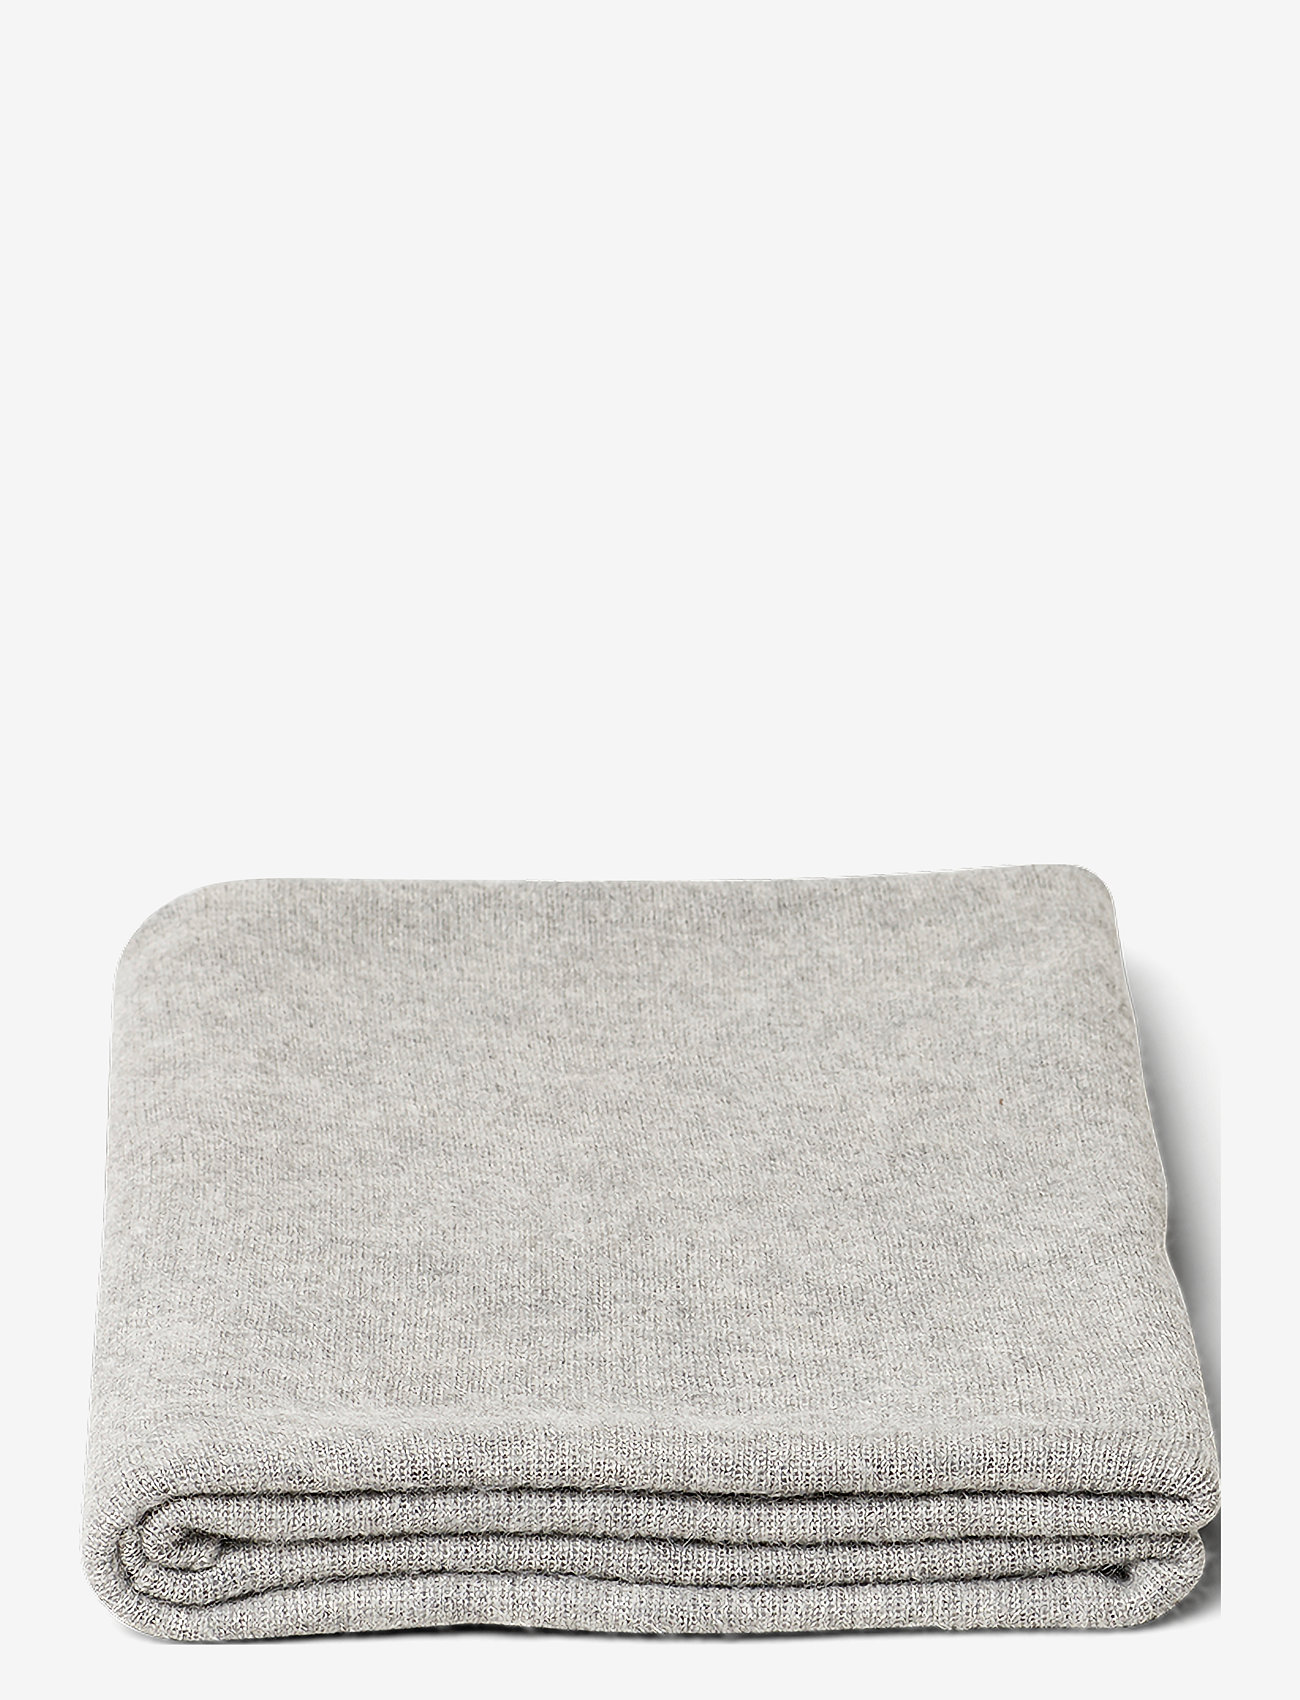 Form & Refine - Aymara Plaid - blankets & throws - cream/off white, light grey and dark grey - 1